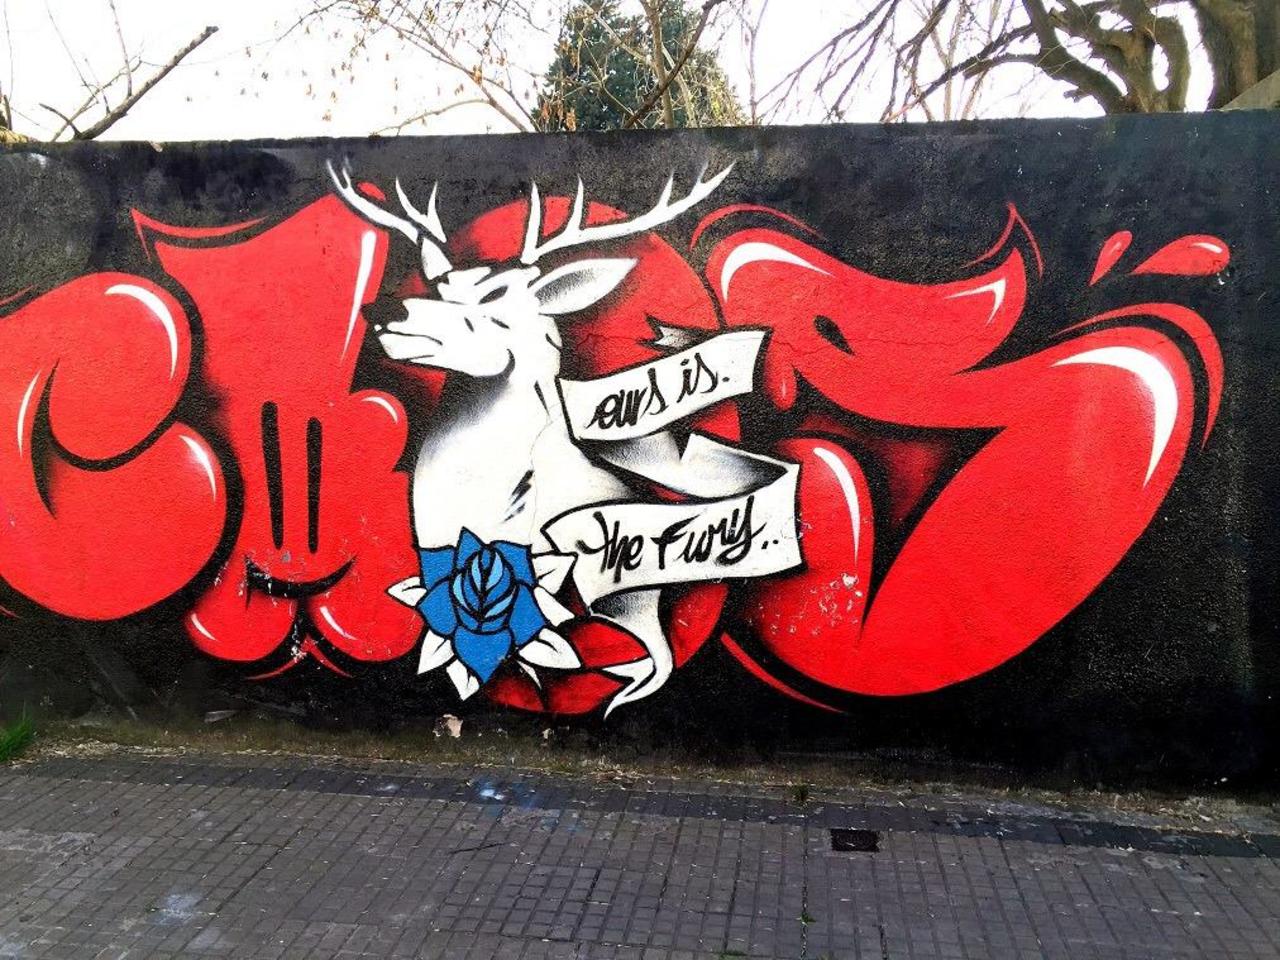 #Graffiti de hoy: << Borges' white hind >> calle 9 66y67 #LaPlata #Argentina #StreetArt #UrbanArt #ArteUrbano http://t.co/oHjgv8tkLF